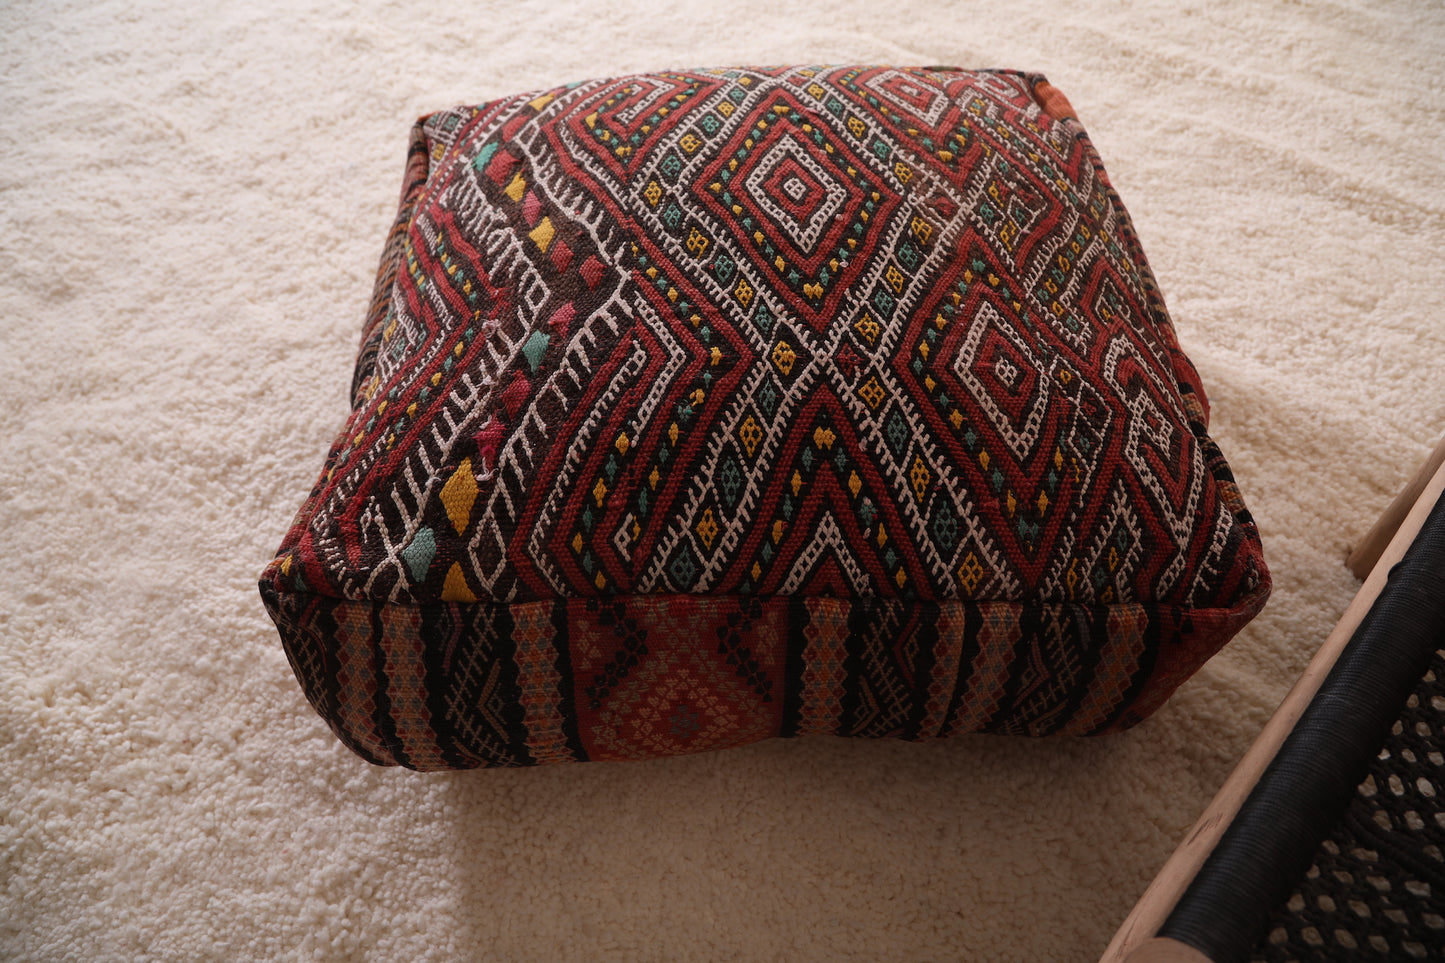 Boho handmade moroccan pouf ottoman